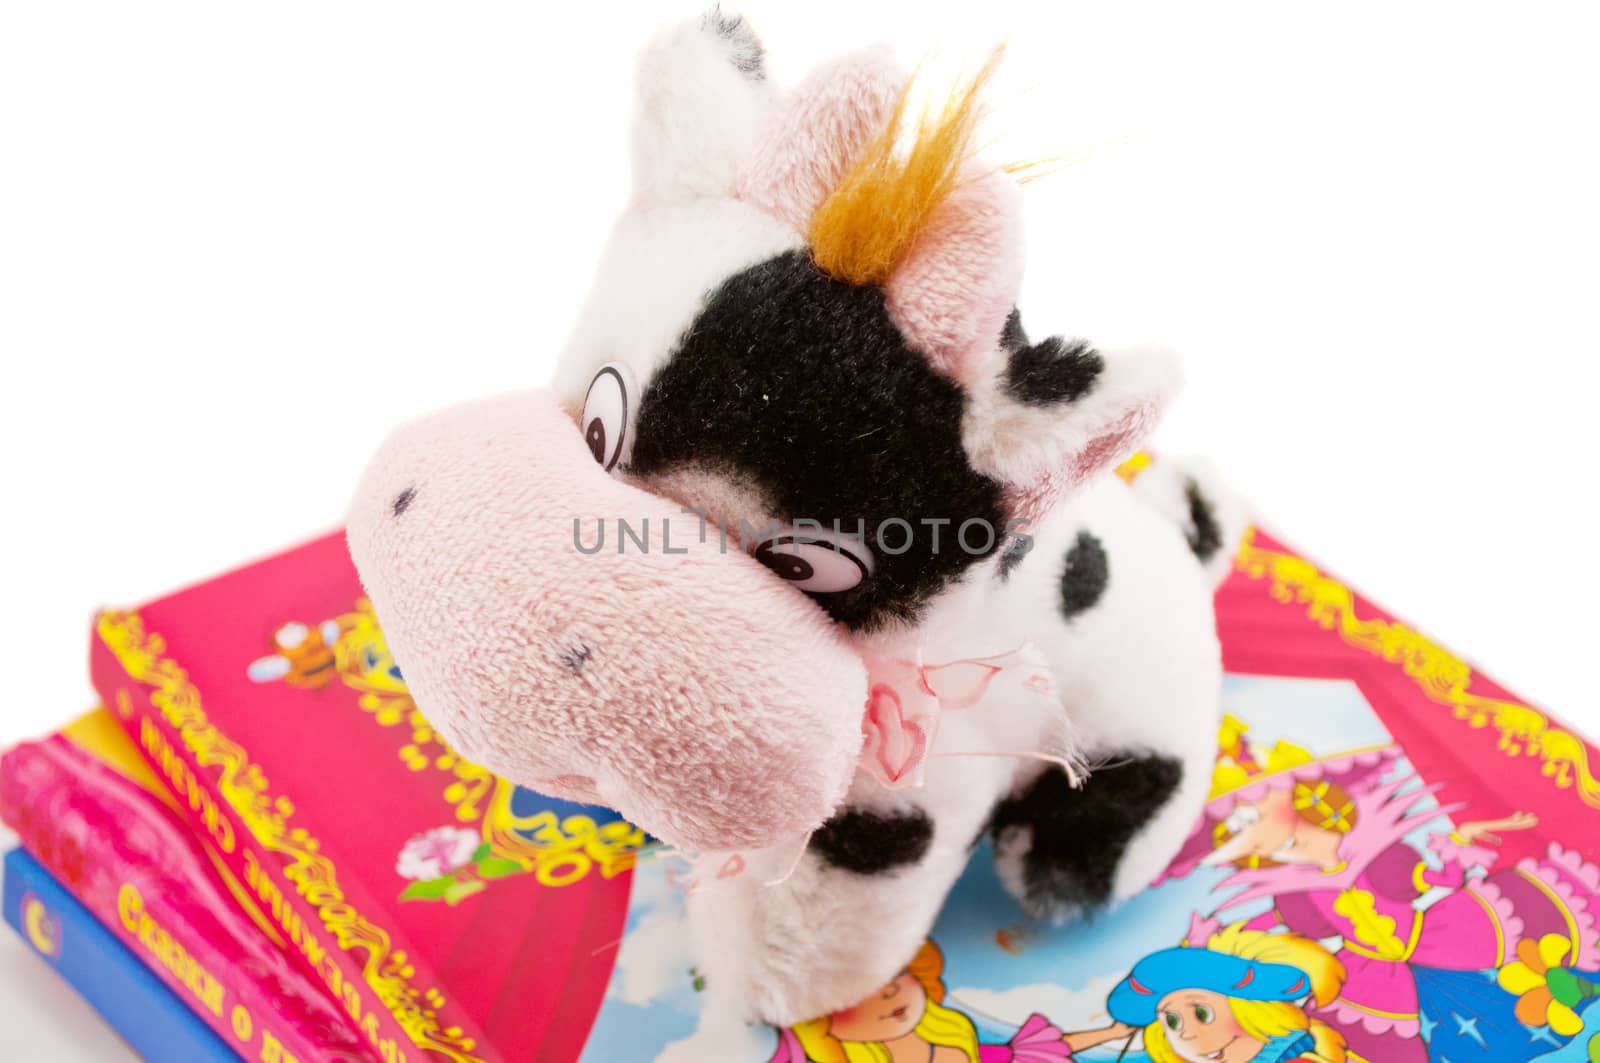 toy cow by ozornina